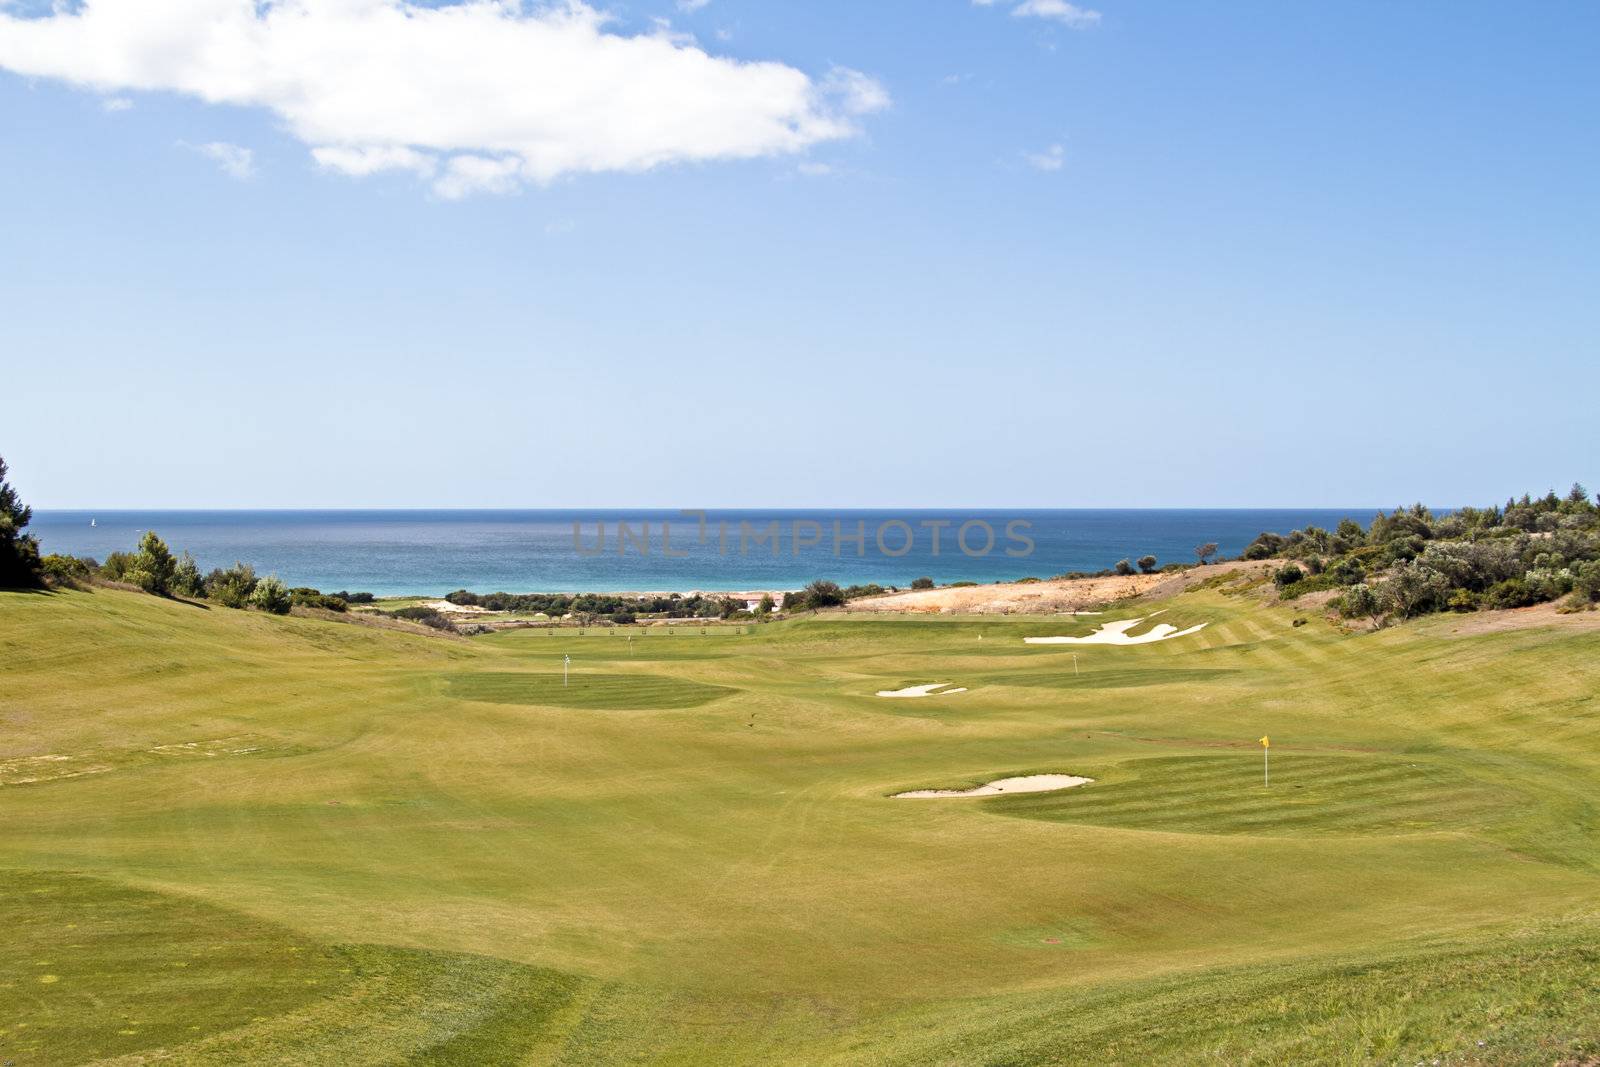 Golf course in the Algarve Portugal